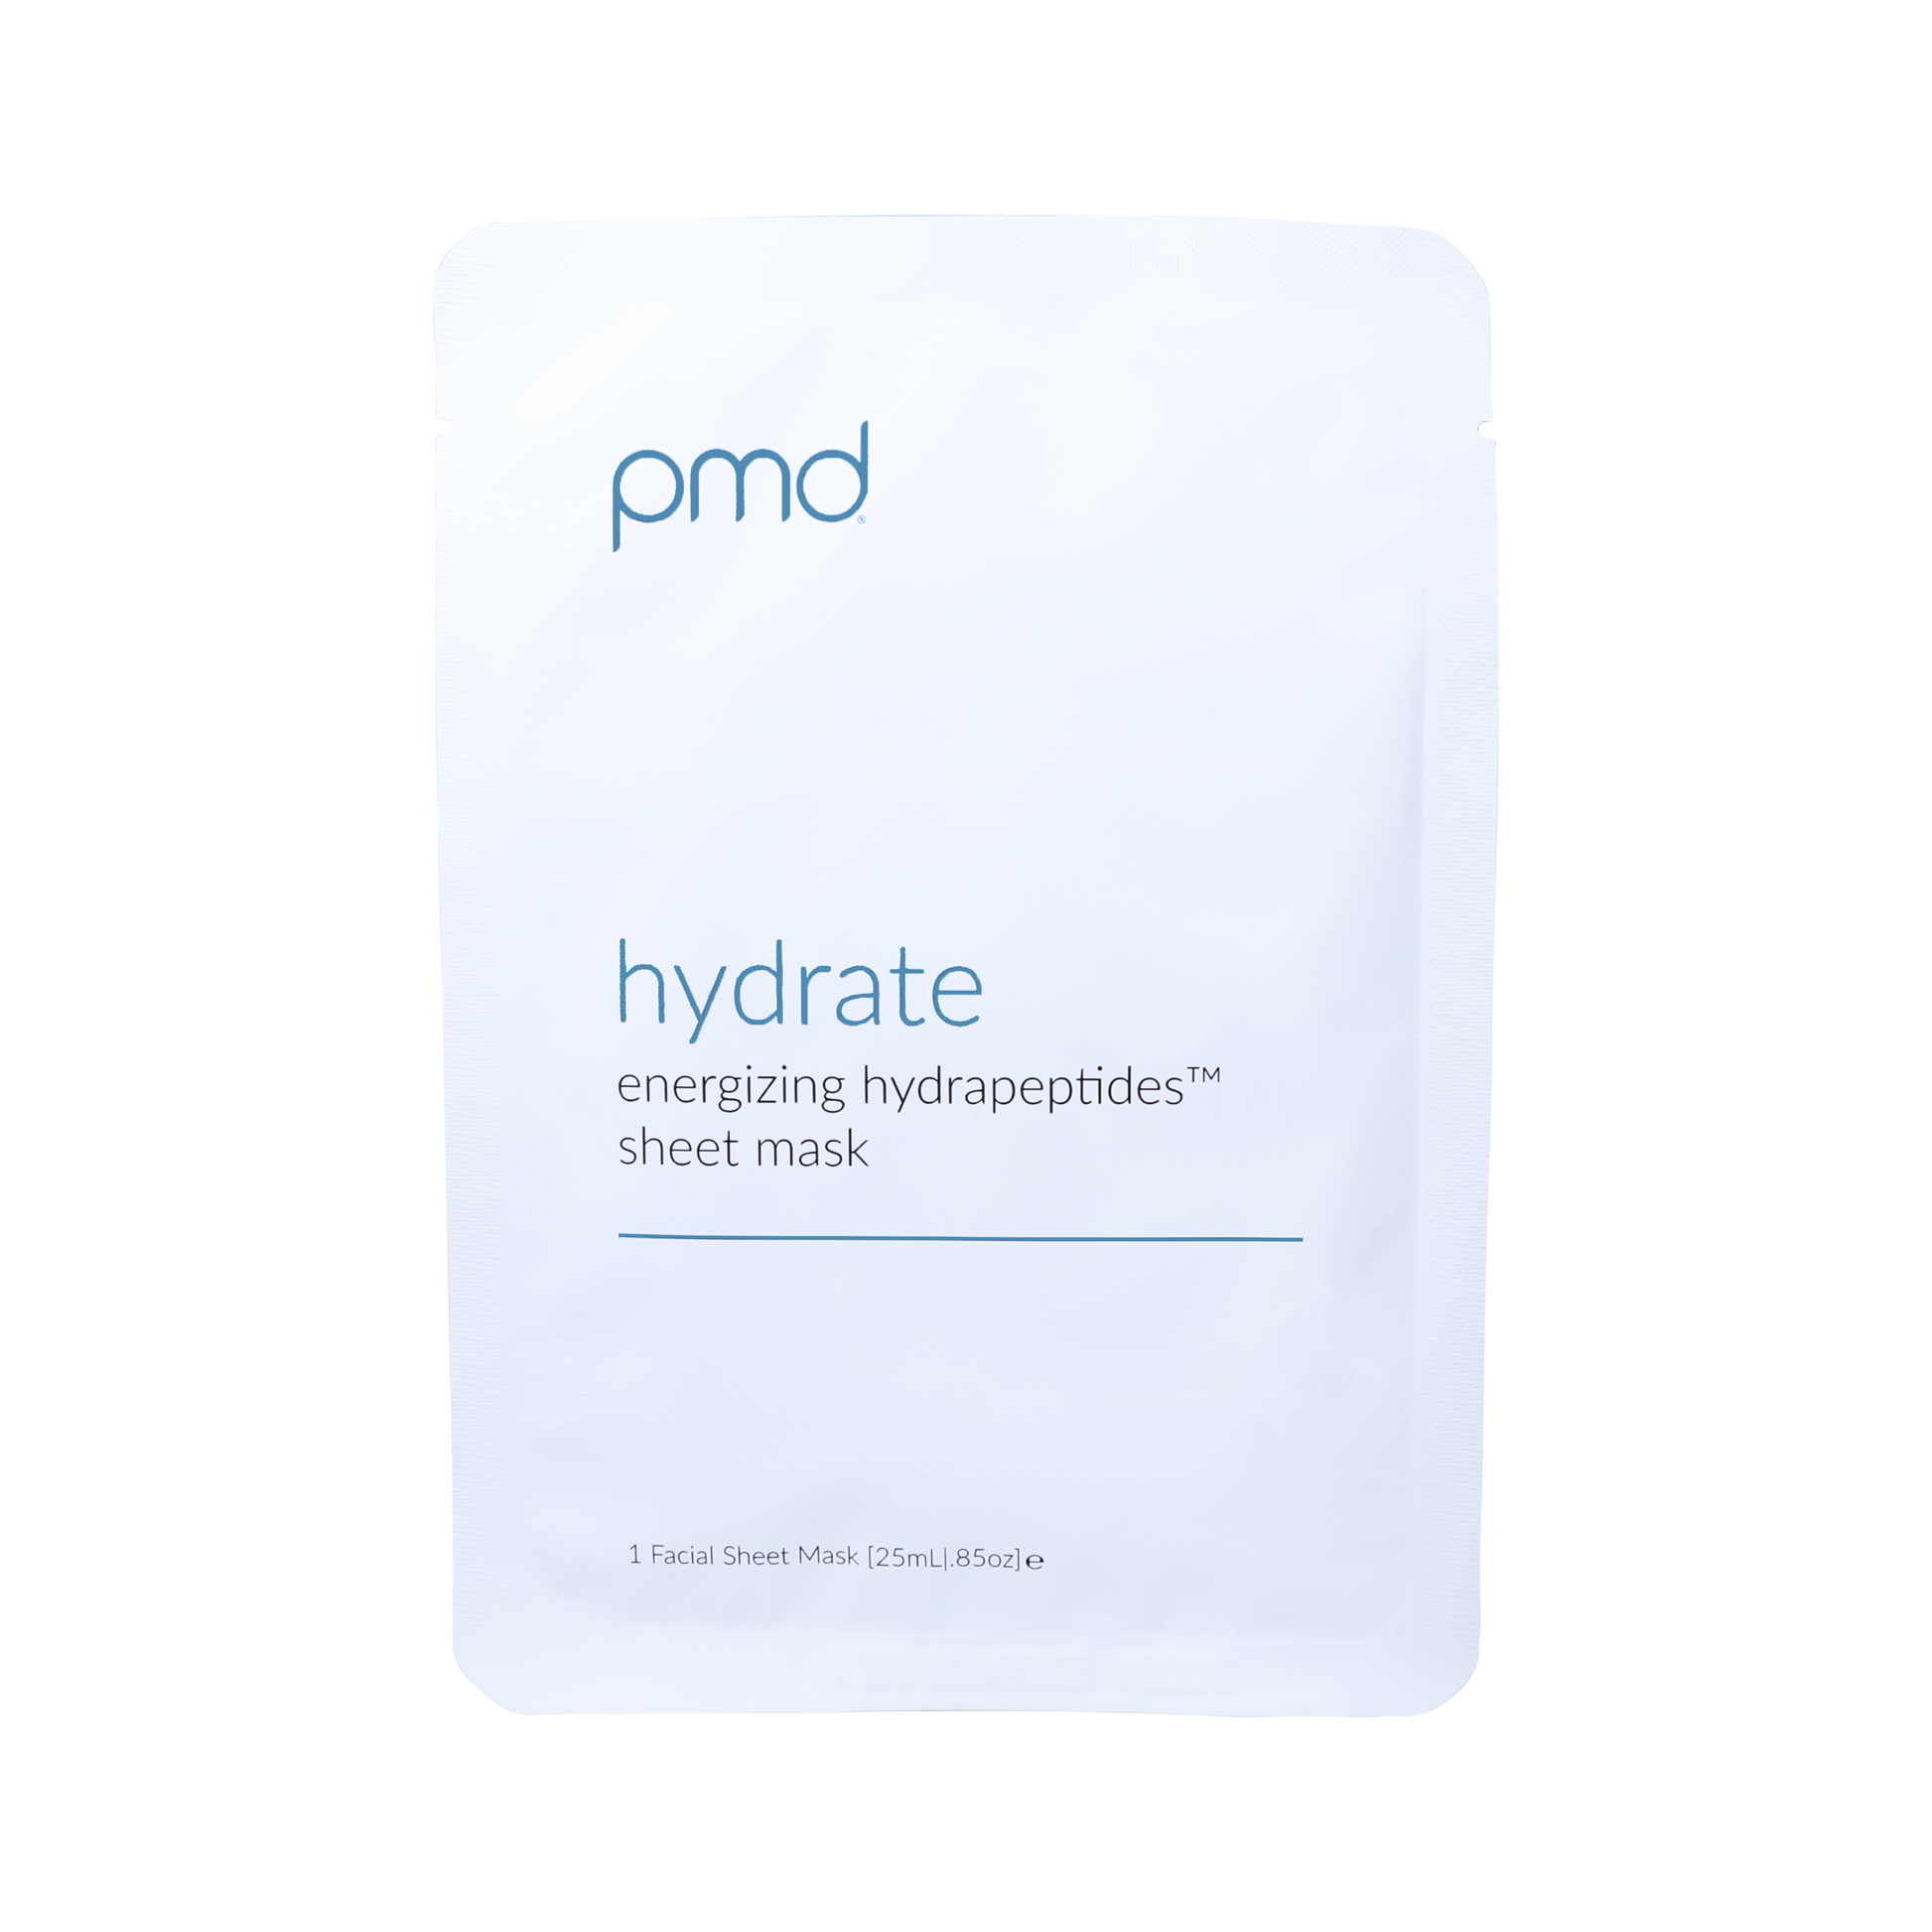 1051-hydrate?Hydrate Energizing HydratingPeptides